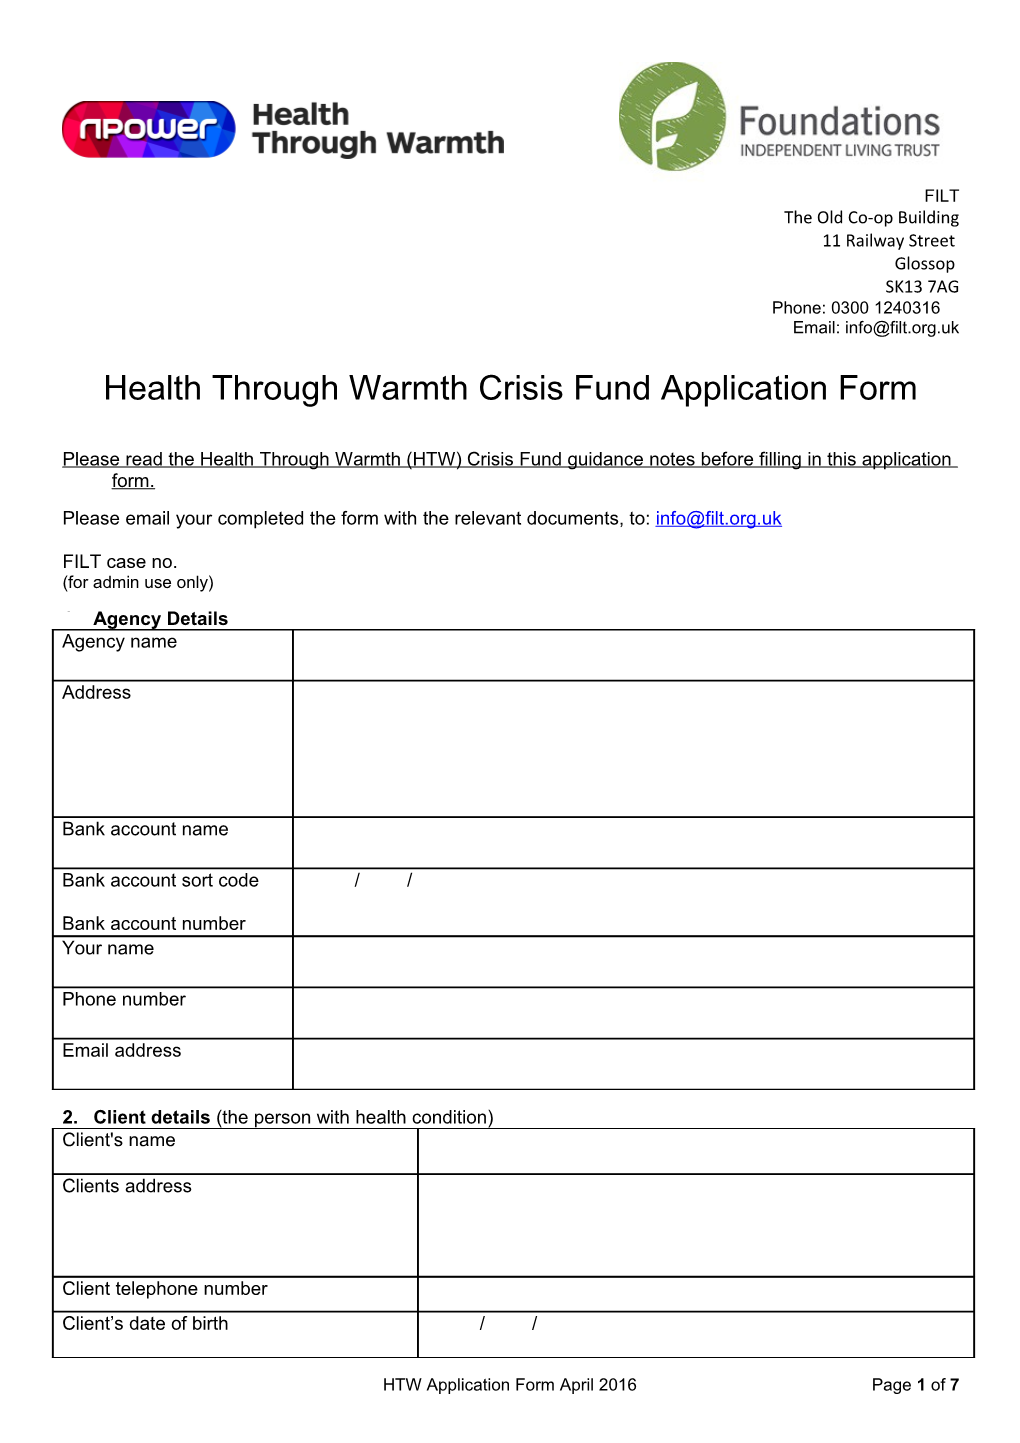 Health Through Warmth Hardship Fund Application Form